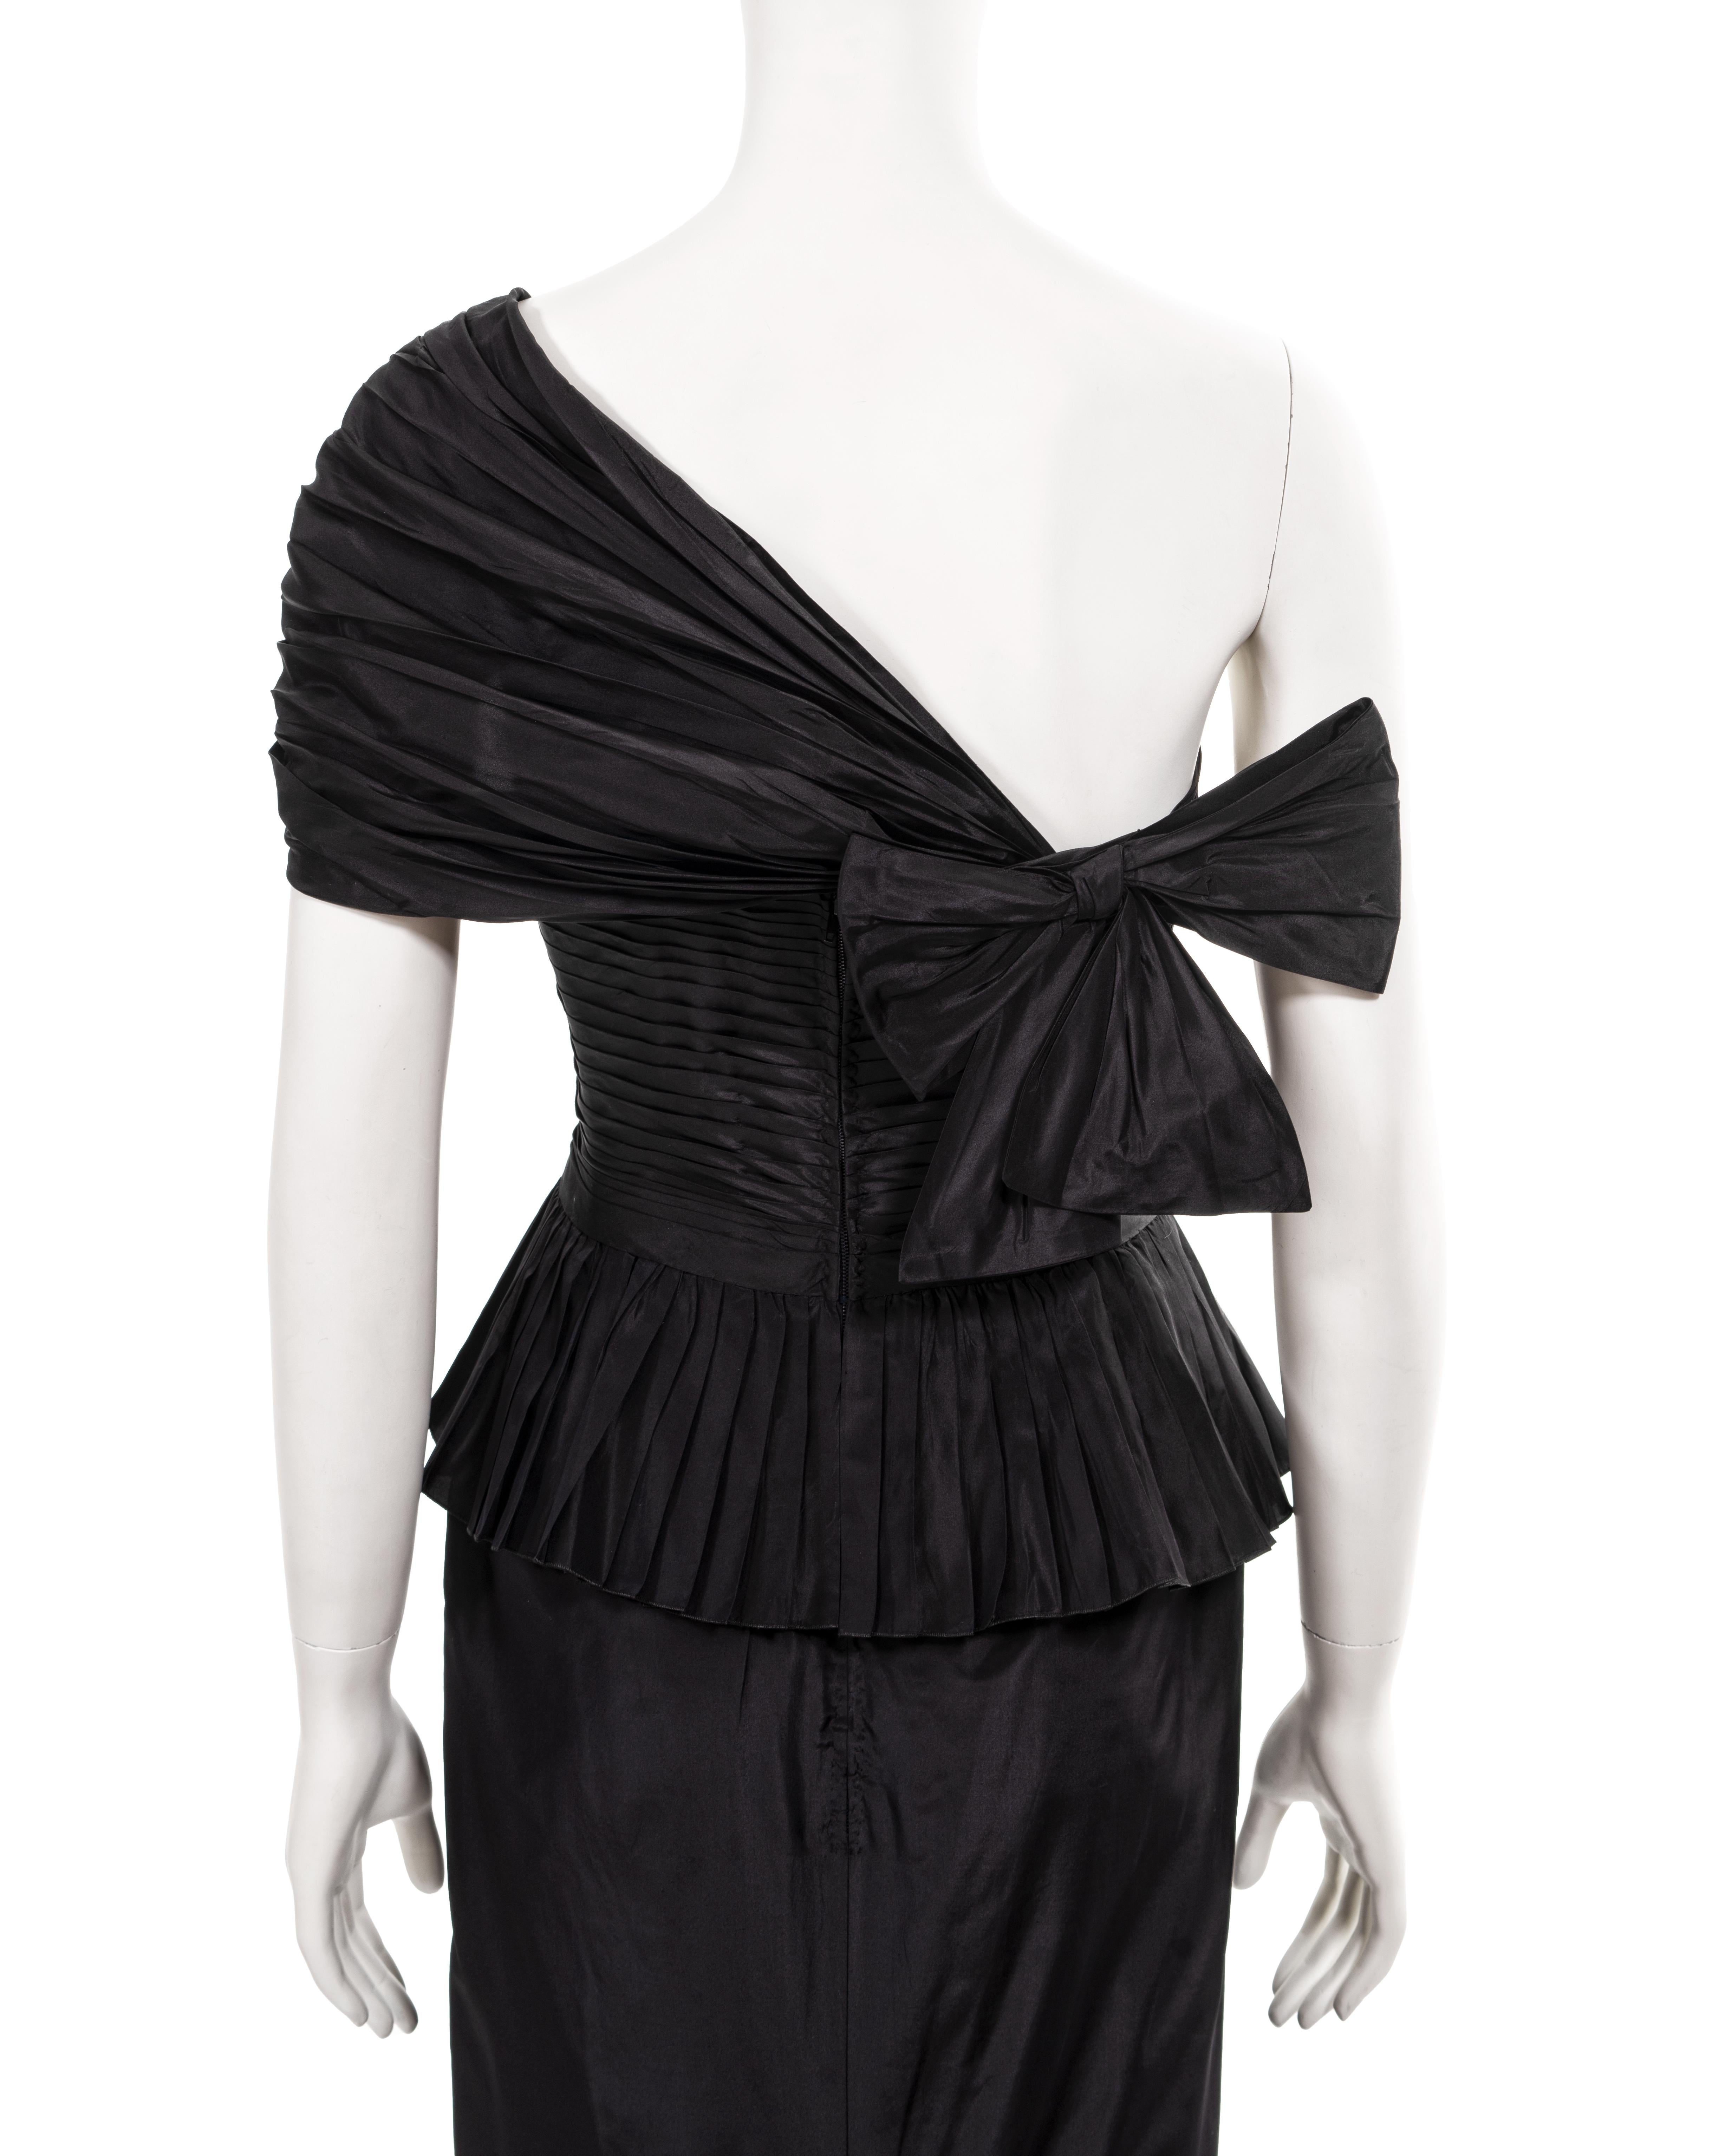 Chanel by Karl Lagerfeld black silk taffeta evening dress, ss 1986 For Sale 10